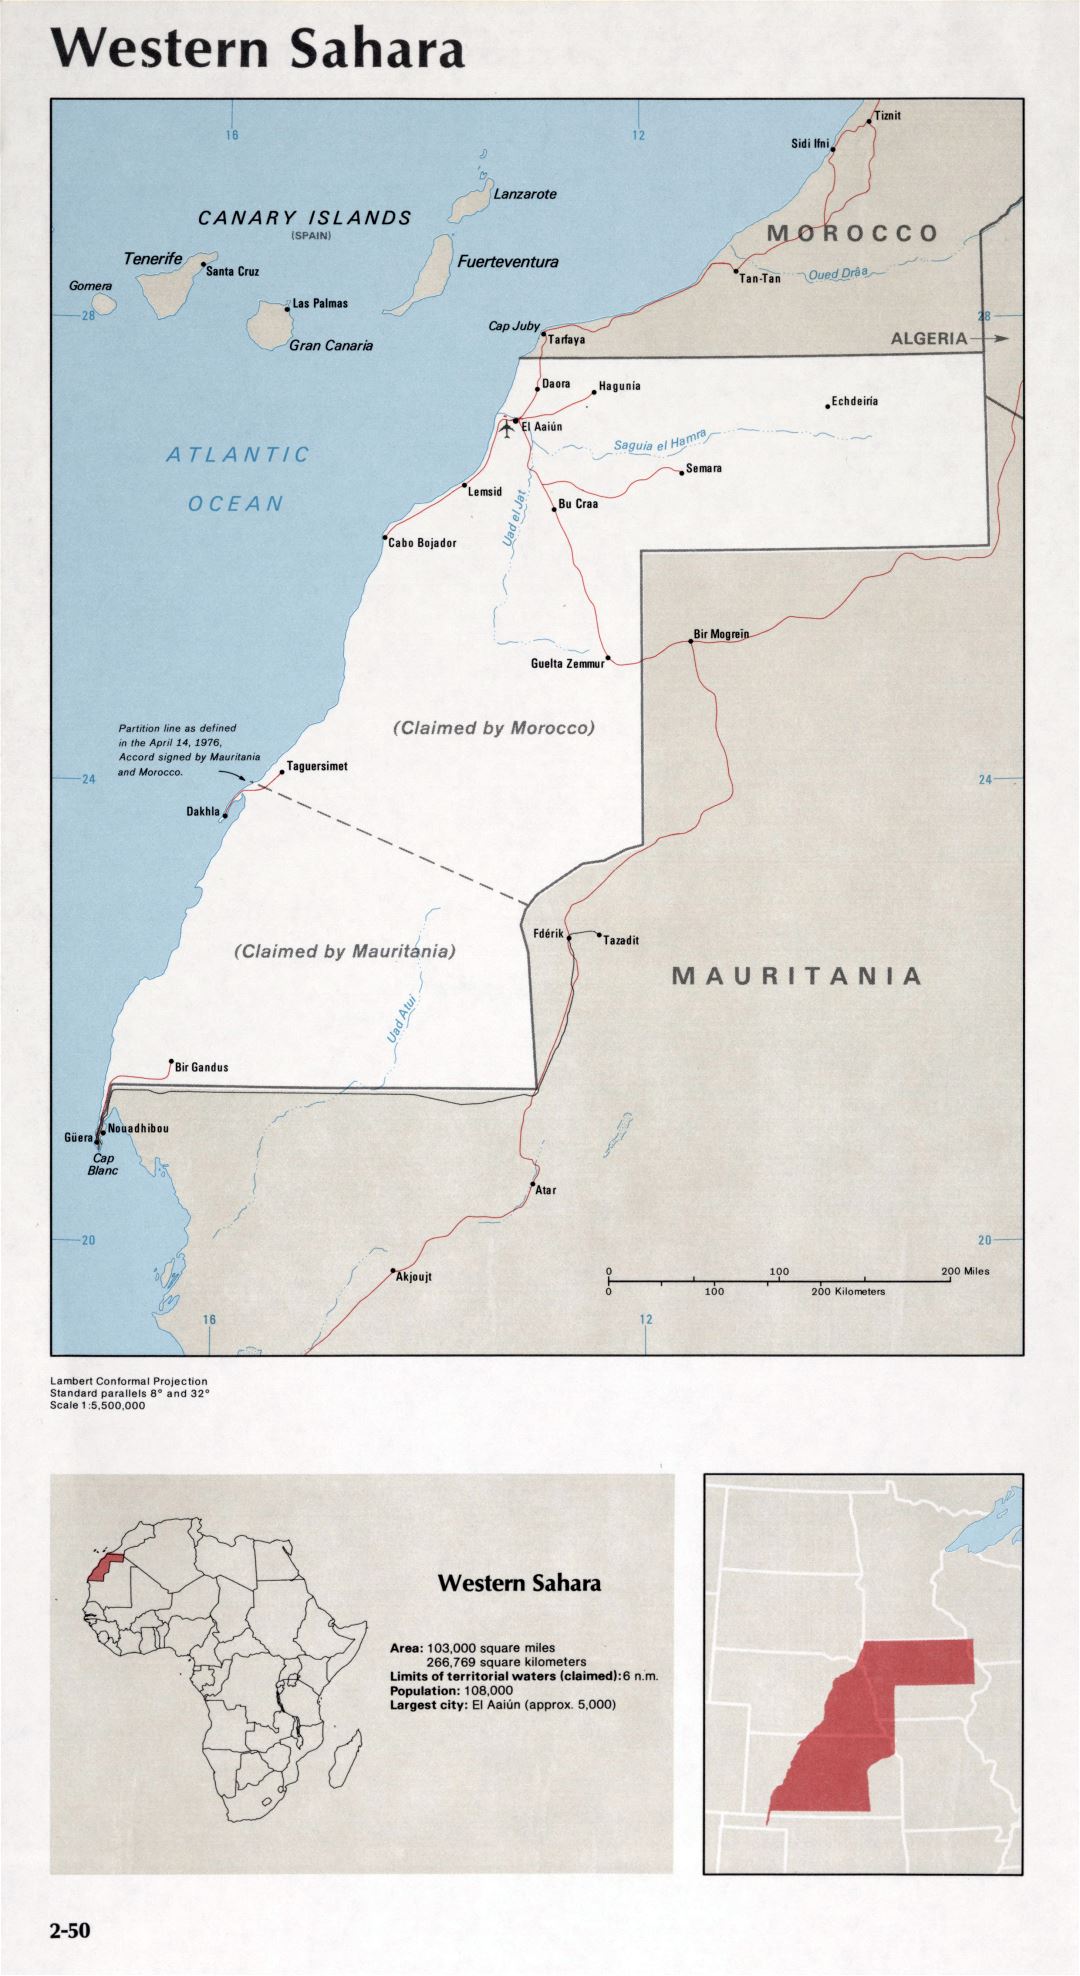 Map of Western Sahara (2-50)